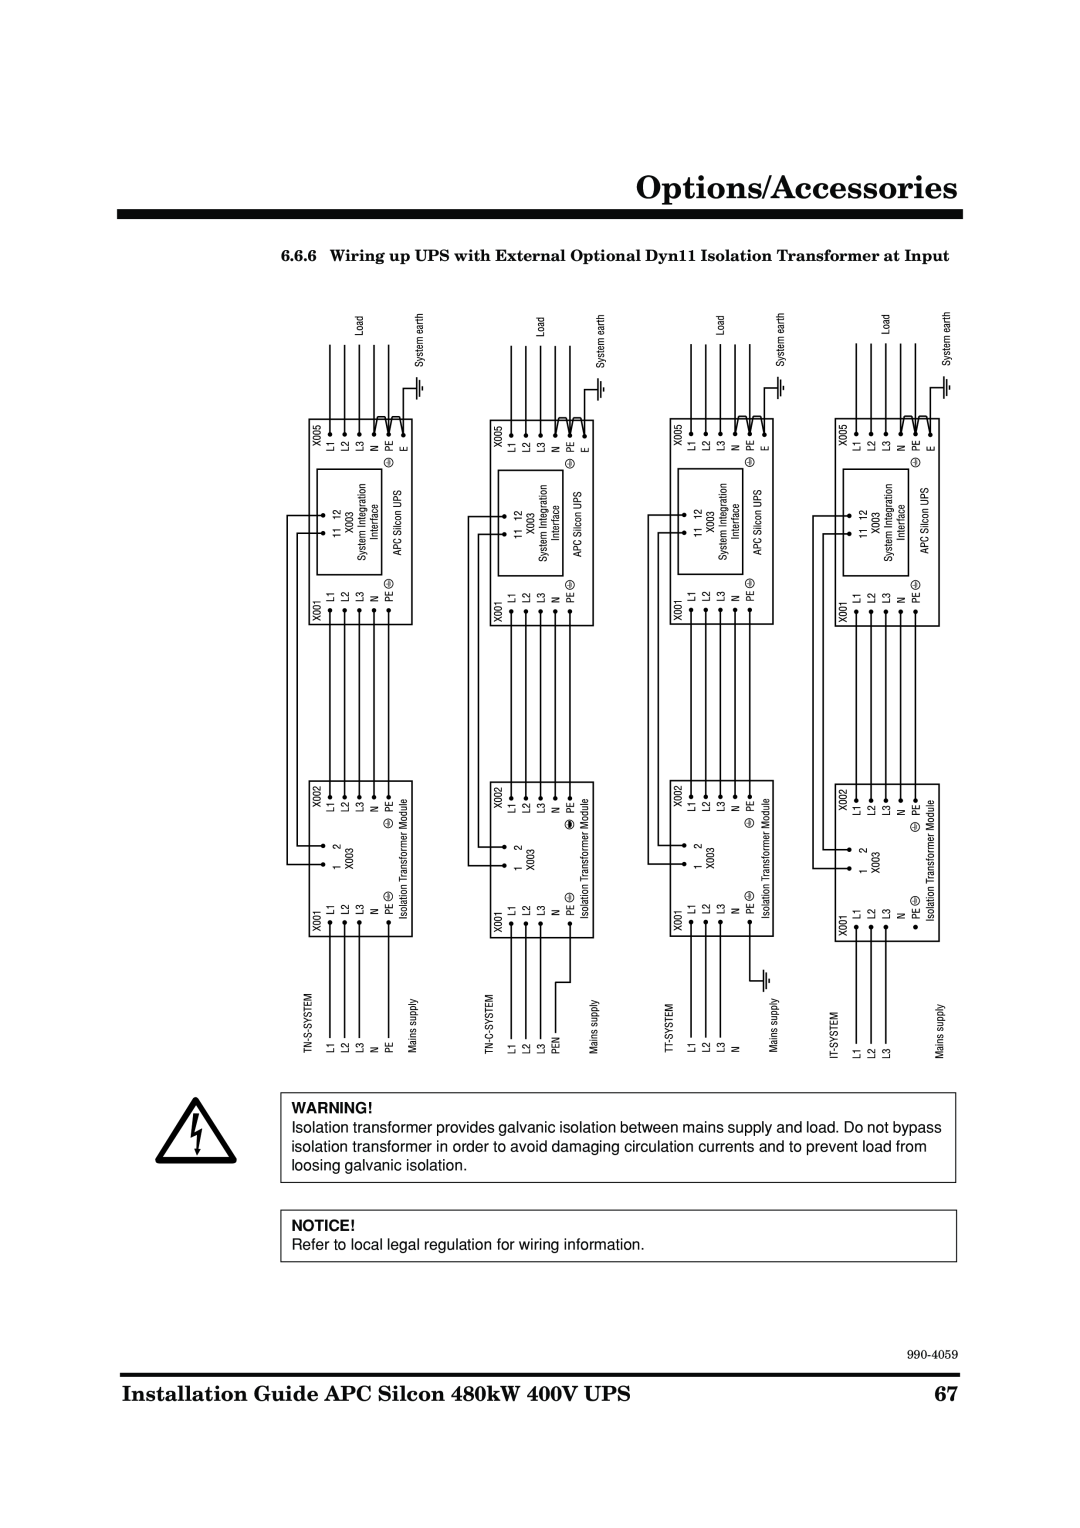 American Power Conversion manual Options/Accessories, Installation Guide APC Silcon 480kW 400V UPS 